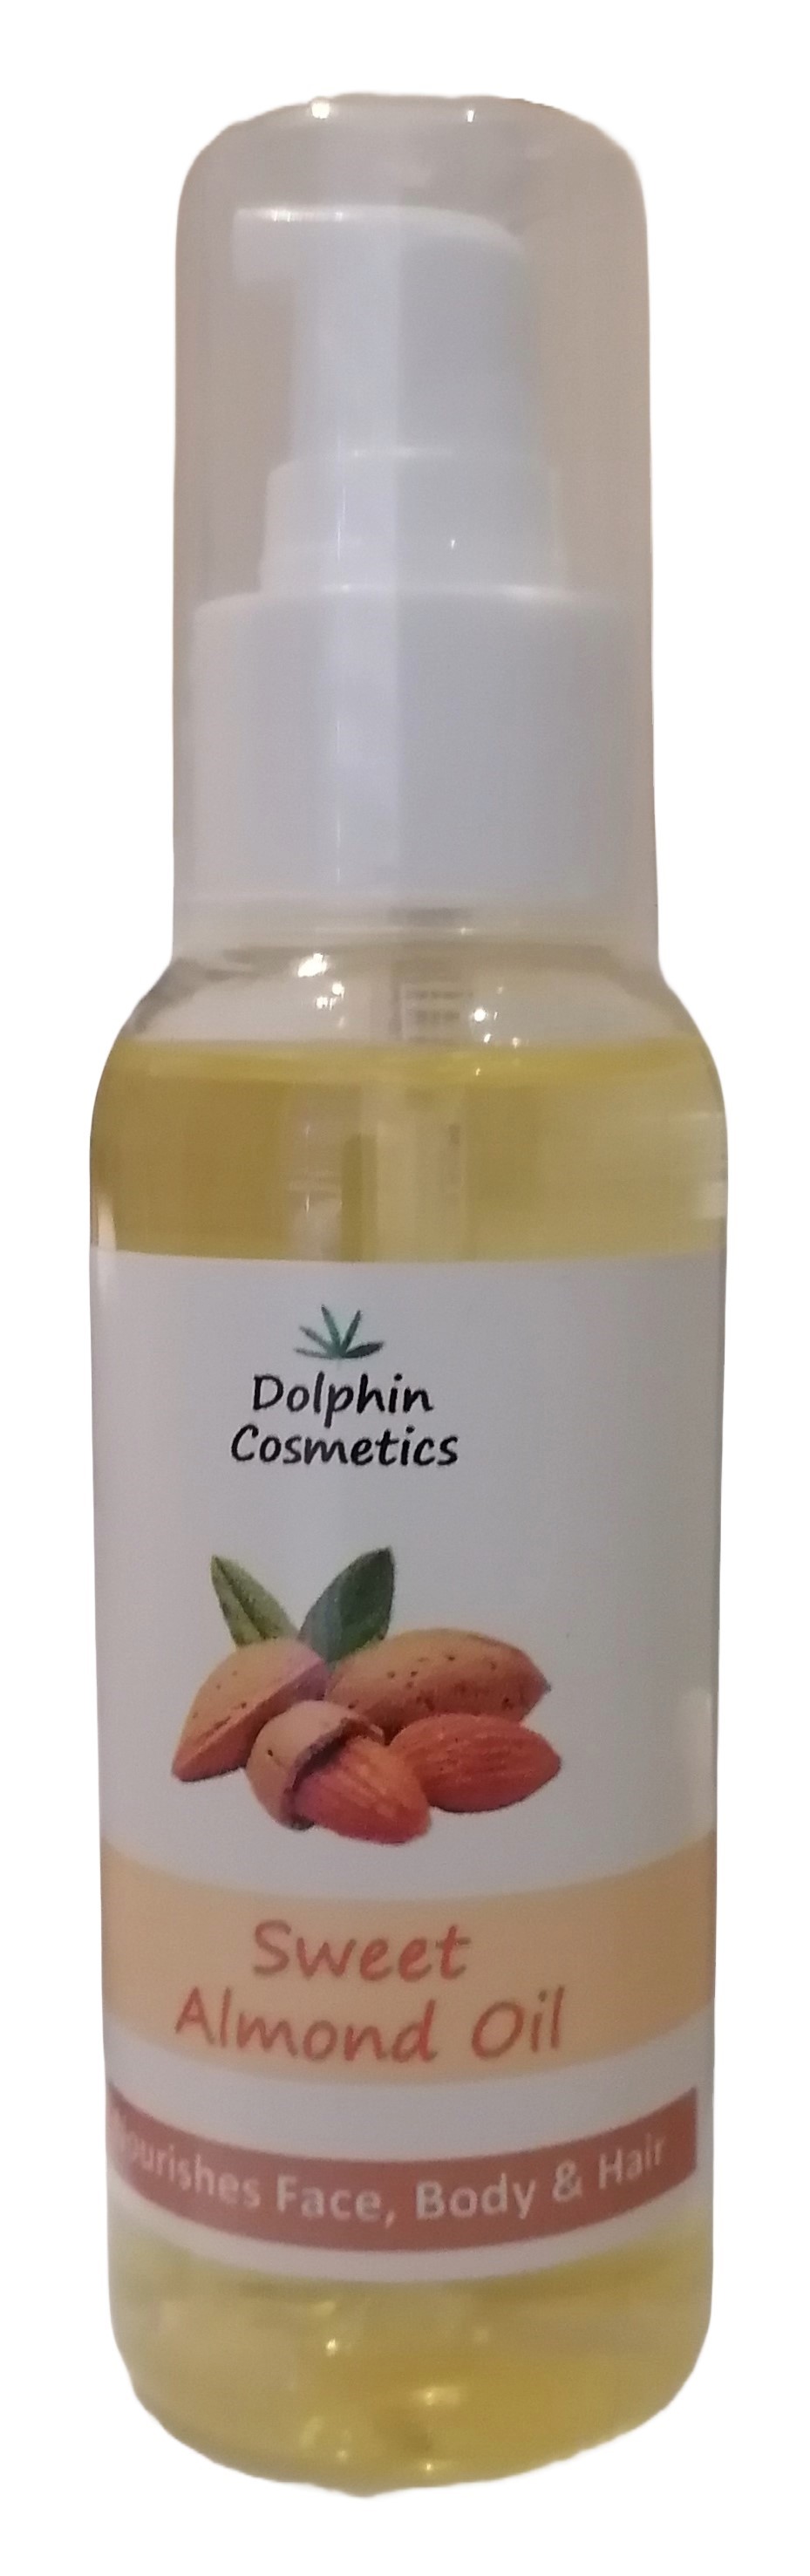 dolphin-cosmetics-sweet-almond-oil